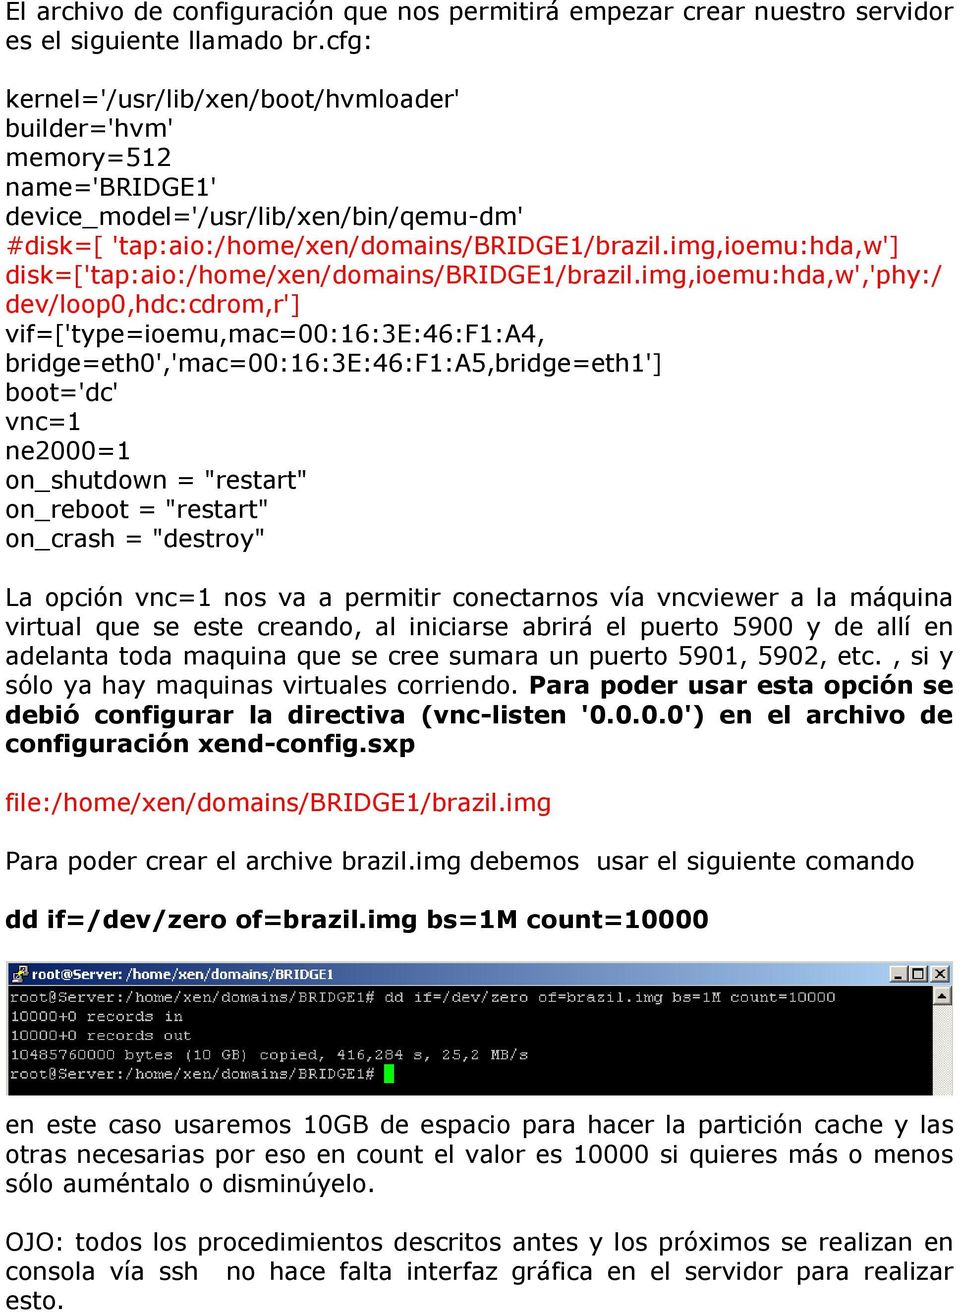 img,ioemu:hda,w'] disk=['tap:aio:/home/xen/domains/bridge1/brazil.